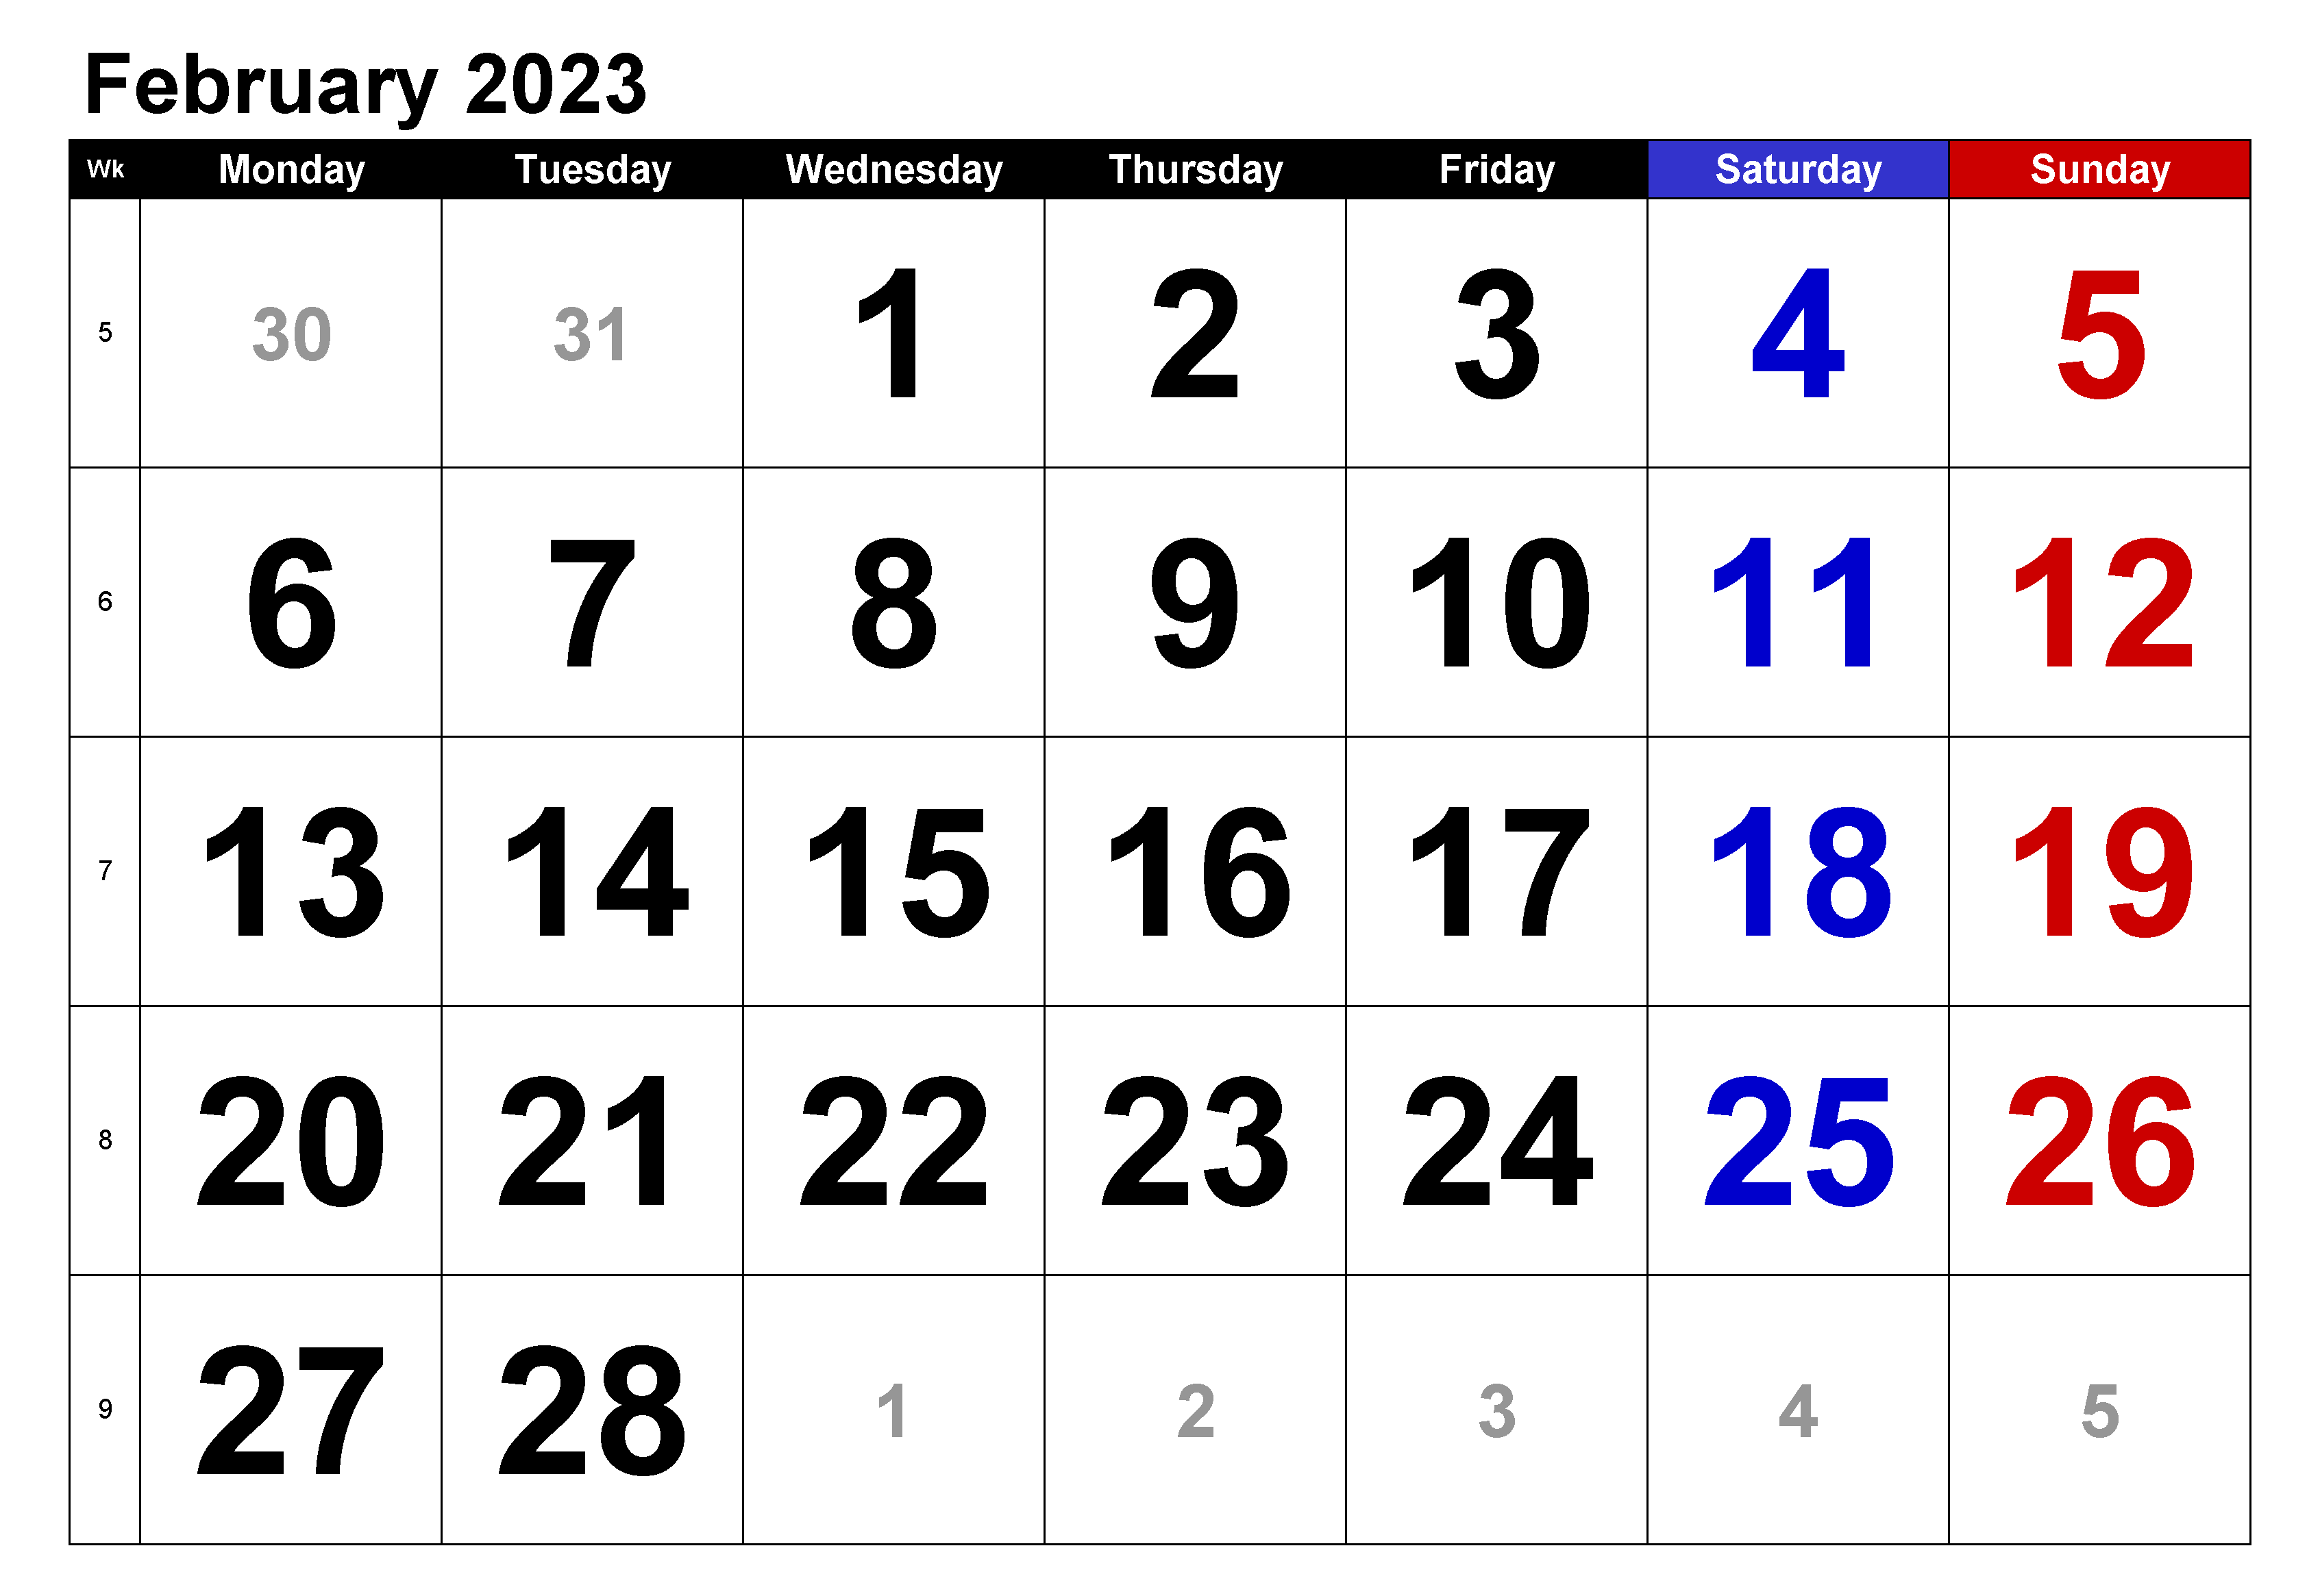 February 2023 Printable Calendar - Know USA Holidays